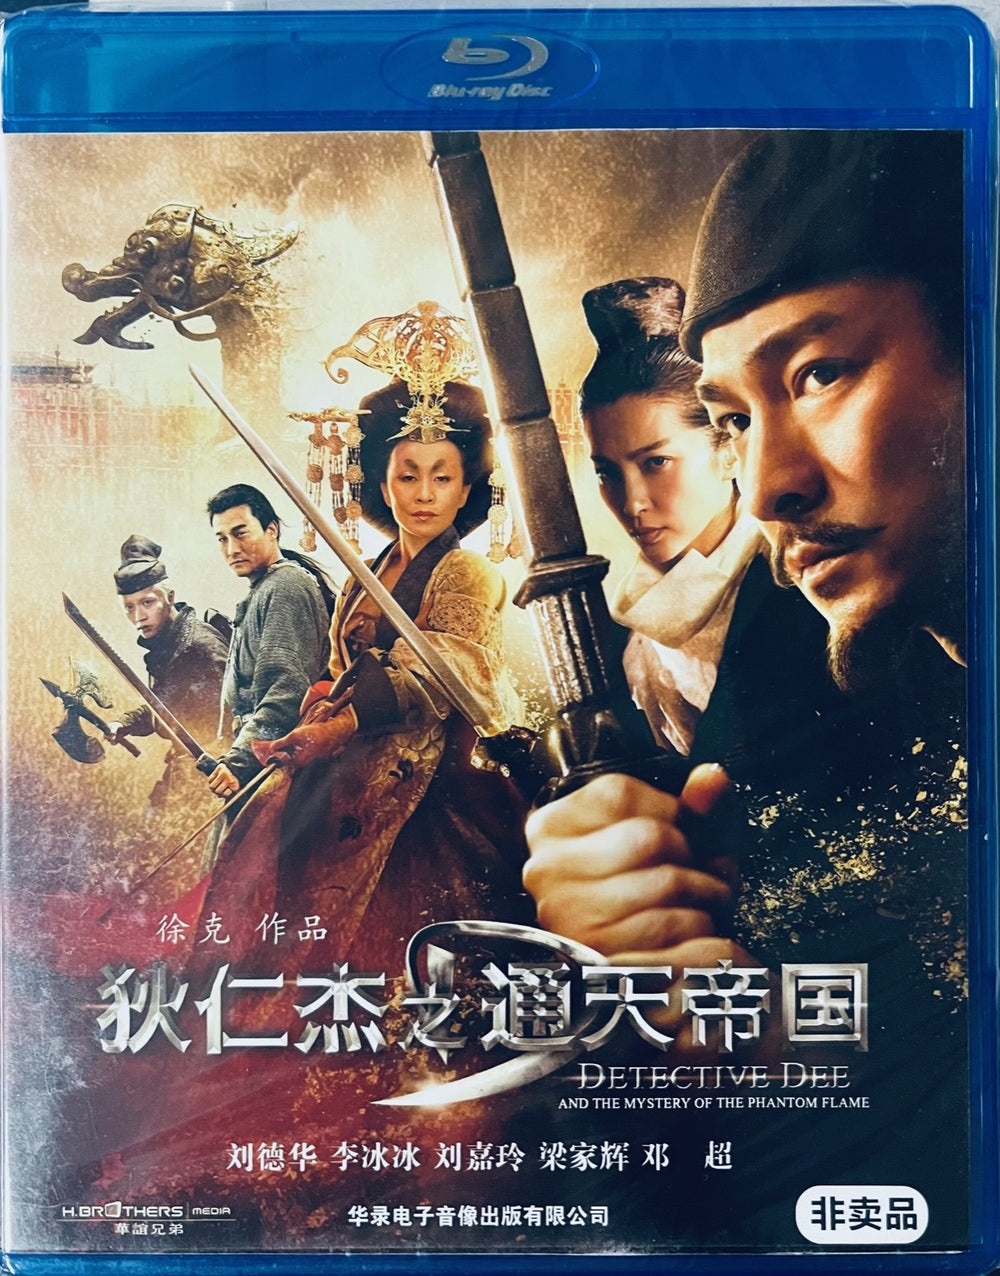 Detective Dee  And The Mystery Of The Phantom 狄仁傑之通天帝國 2010  (Hong Kong Movie) BLU-RAY with English Sub (Region Free)